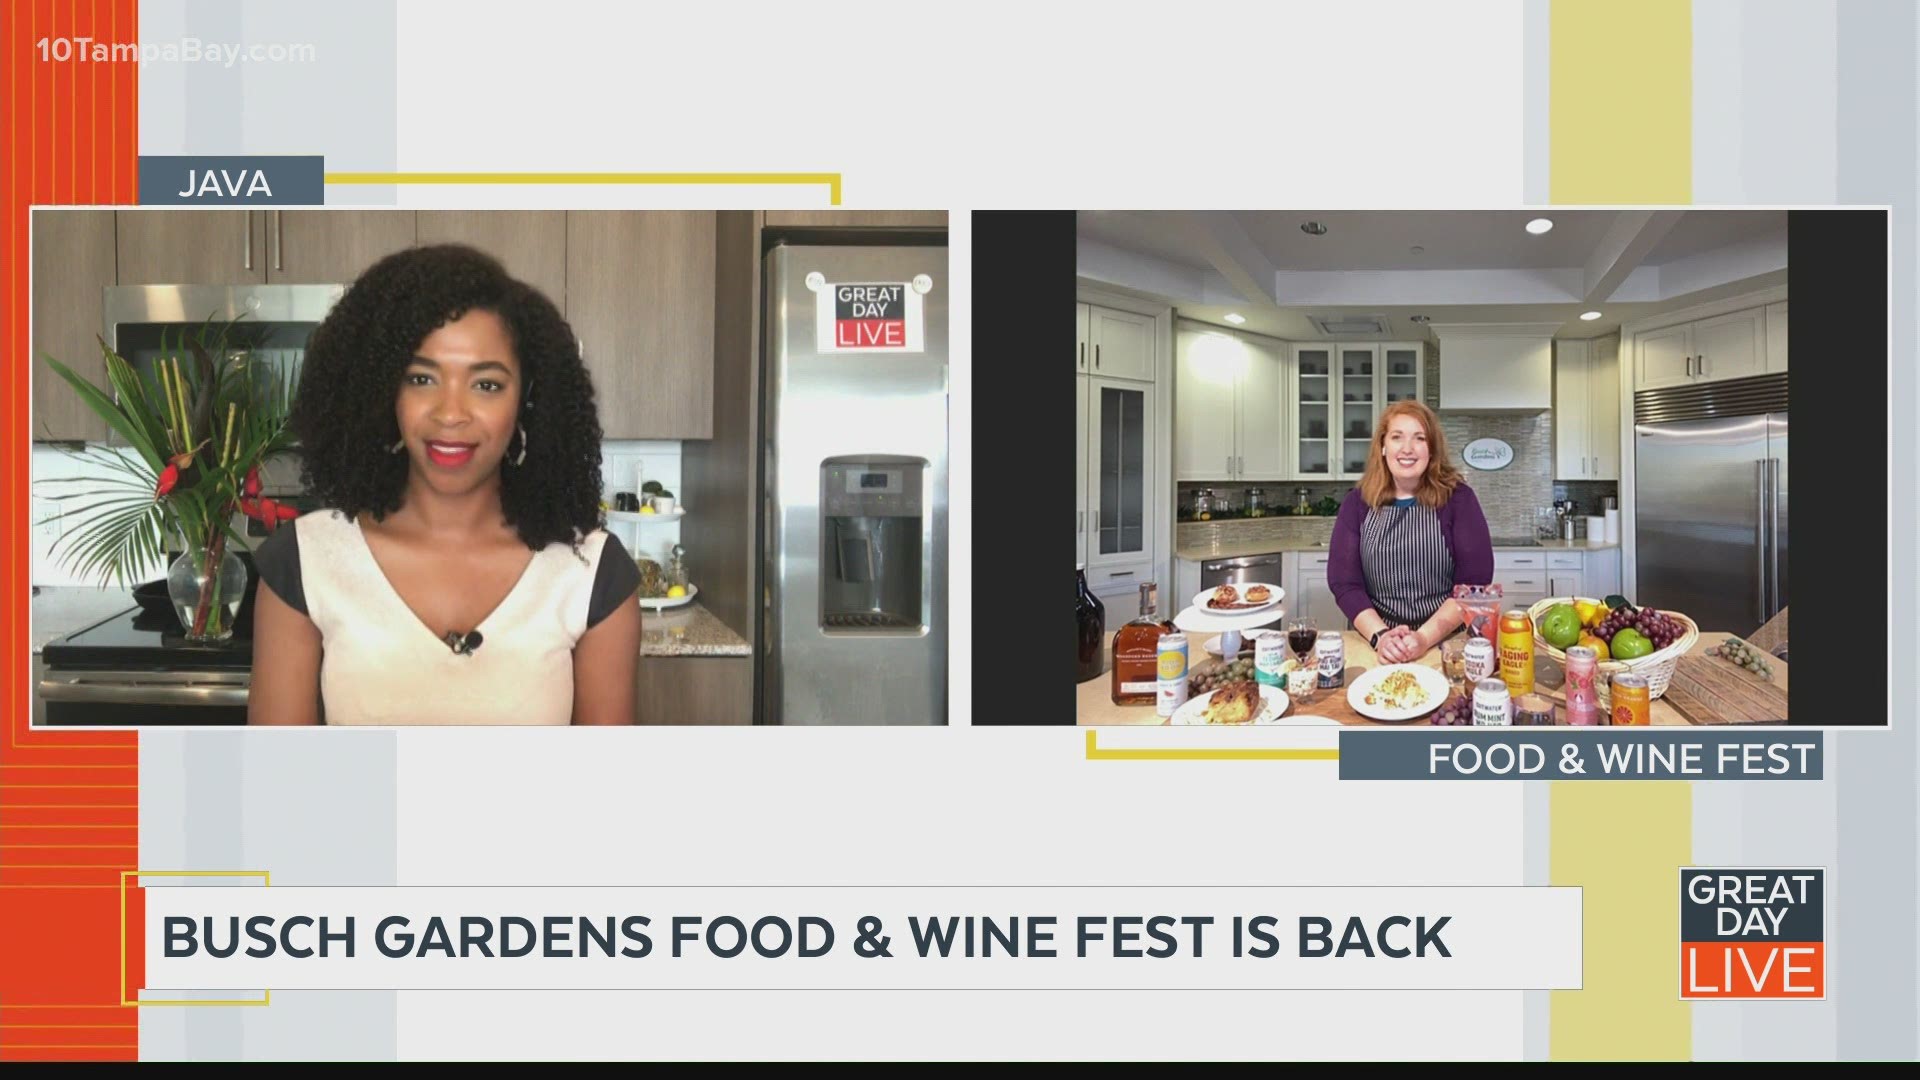 Busch Gardens' Food & Wine festival is back